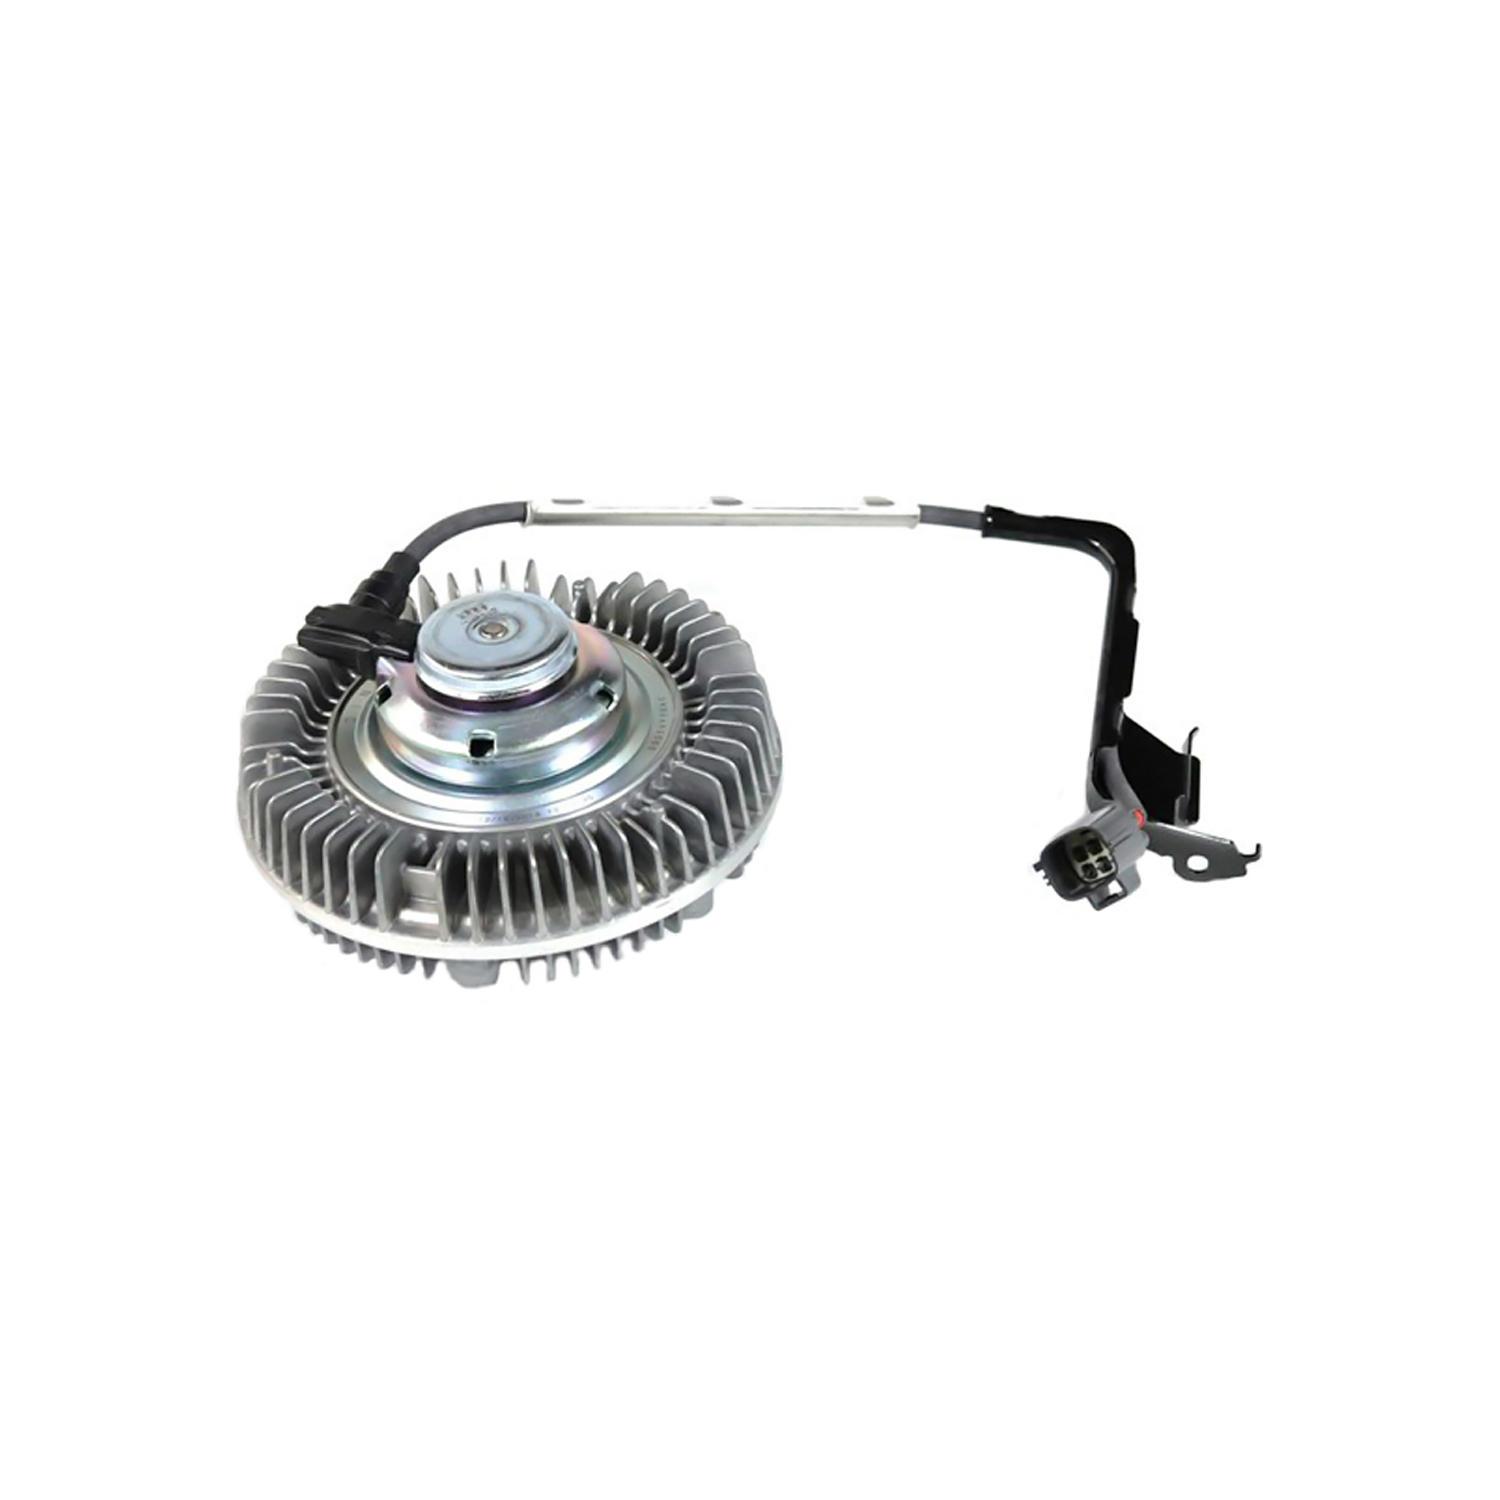 MOPAR BRAND - Radiator Cooling Unit - MPB 55056990AC